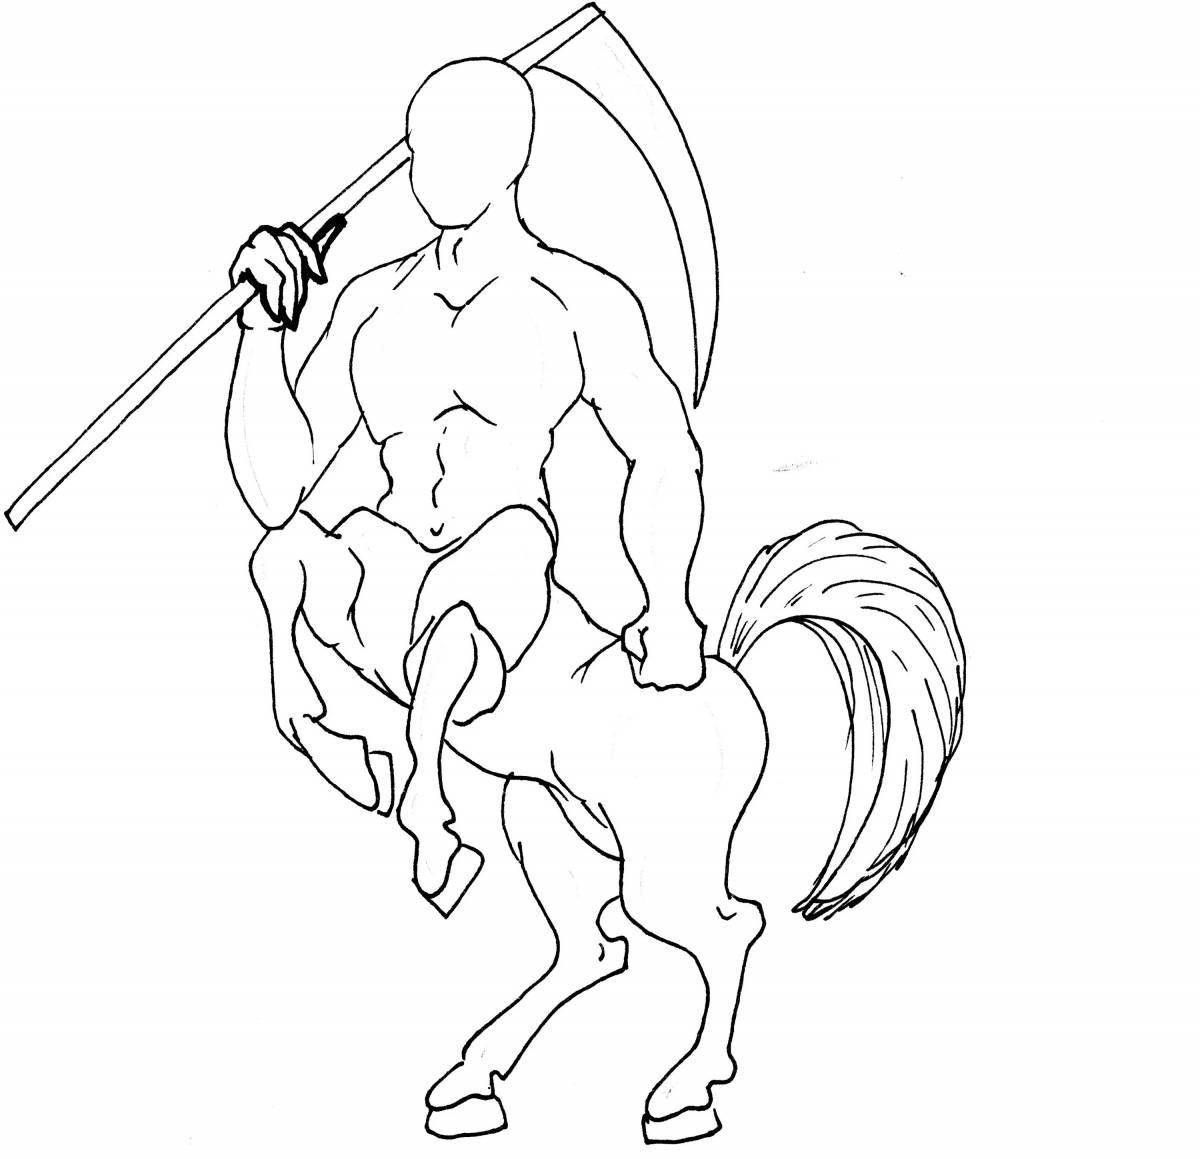 Fairytale coloring centaur for children